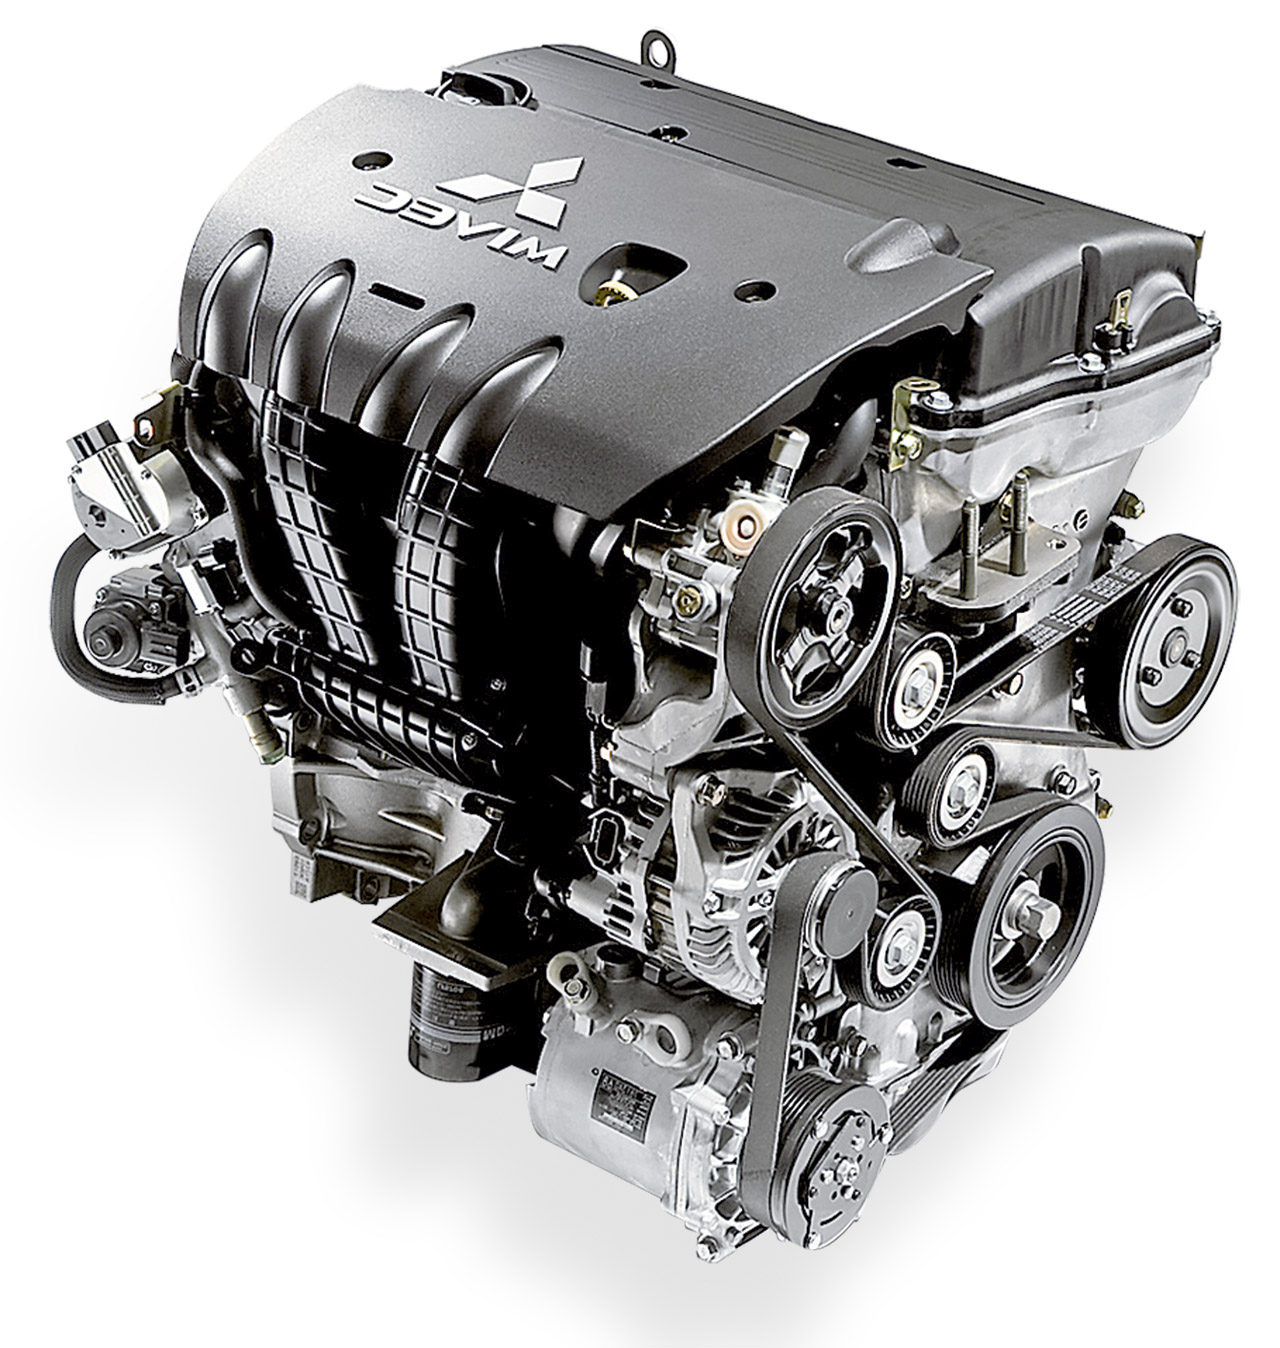 Двигатели мицубиси лансер 10. 4b12 мотор Outlander. Двигатель 4b10 Mitsubishi Lancer 10 1.8. 4b12 Mitsubishi двигатель. Двигатель Митсубиси Лансер 10.